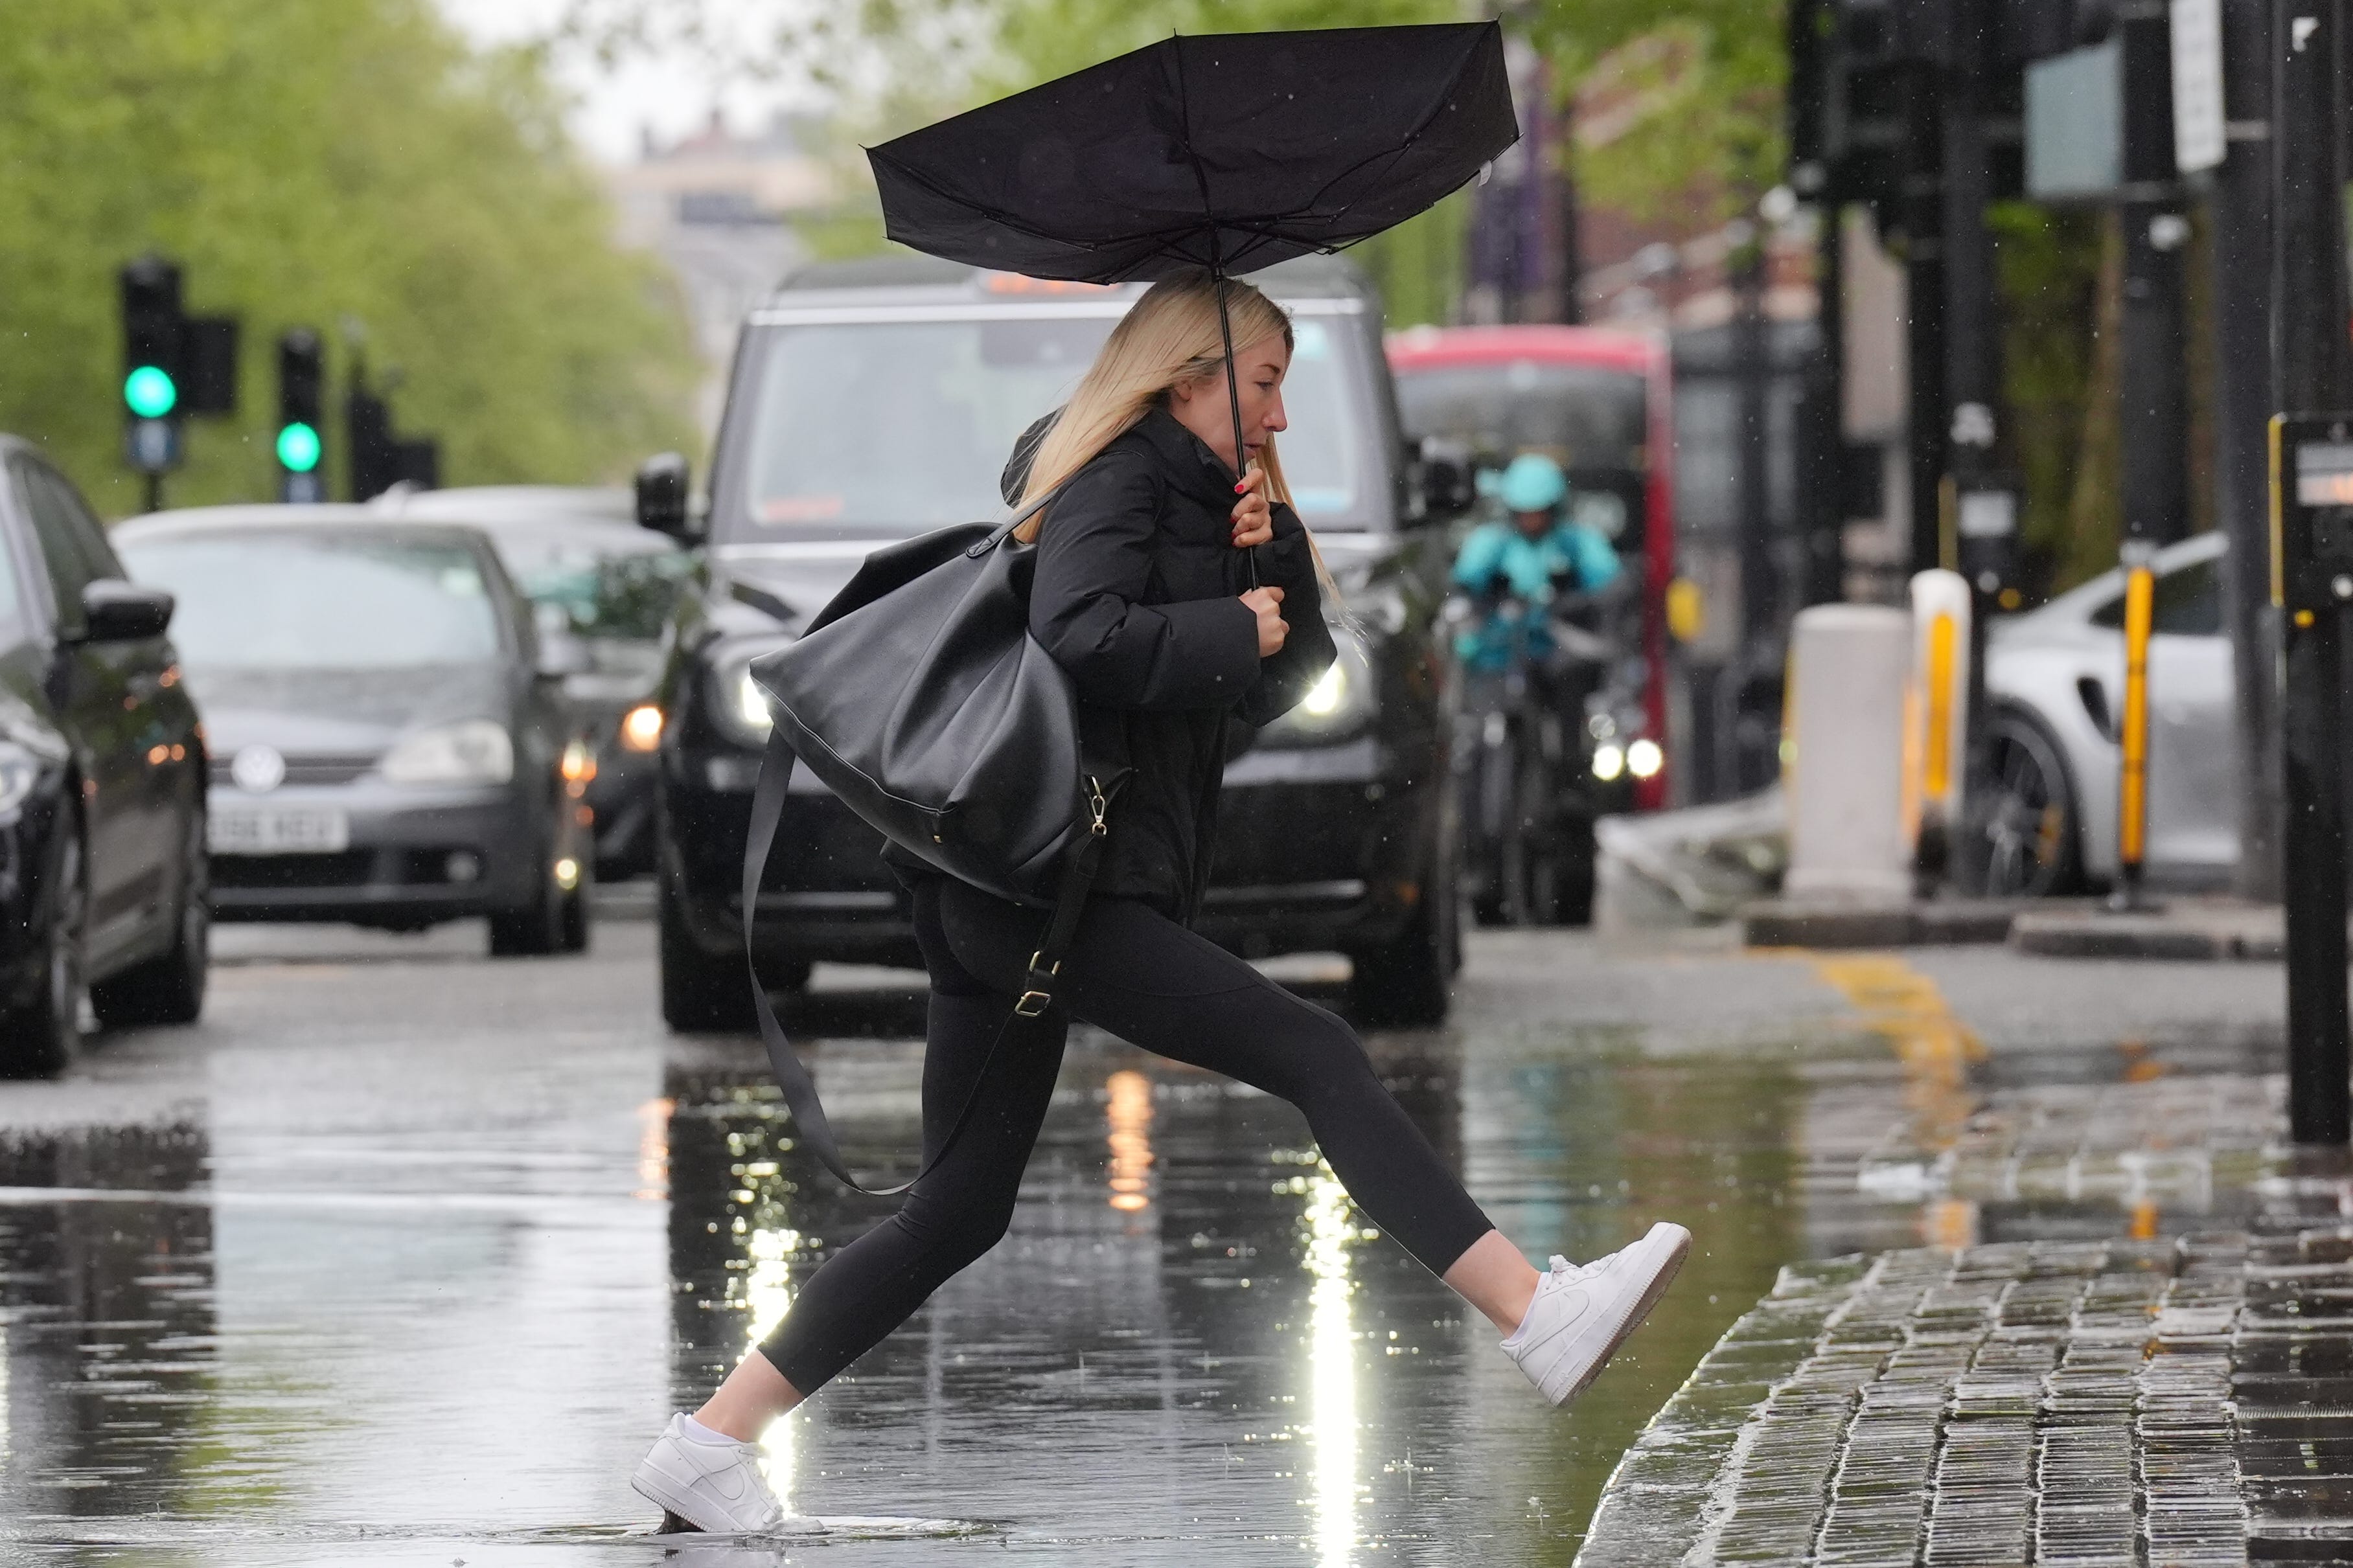 Flood warnings were issued across the UK on Sunday